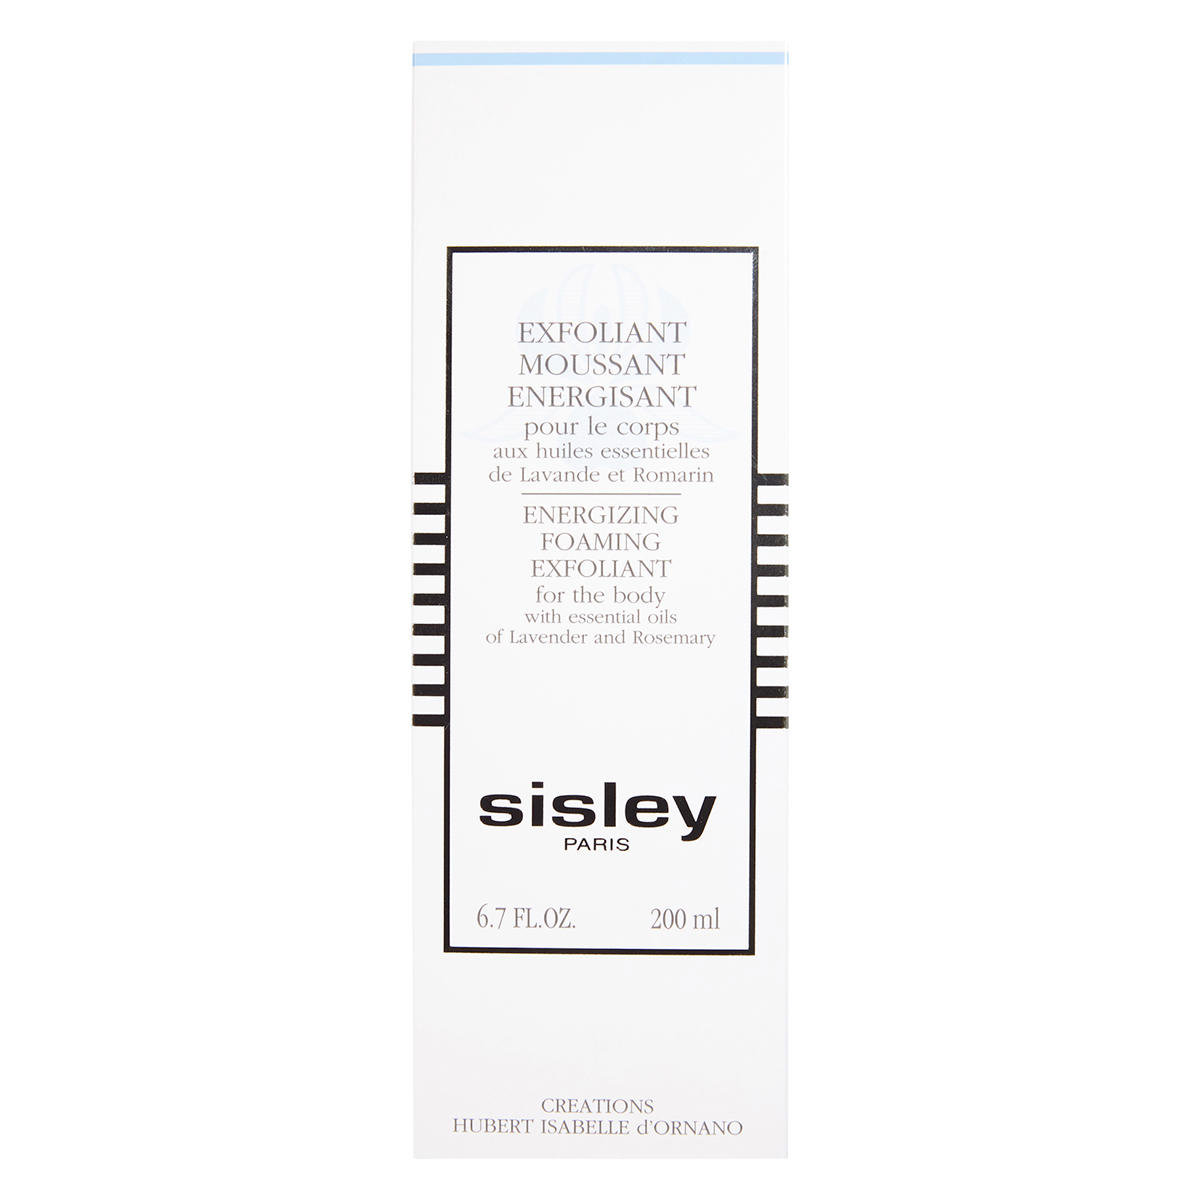 Sisley Paris Exfoliant Moussant Energisant 200 ml - 4